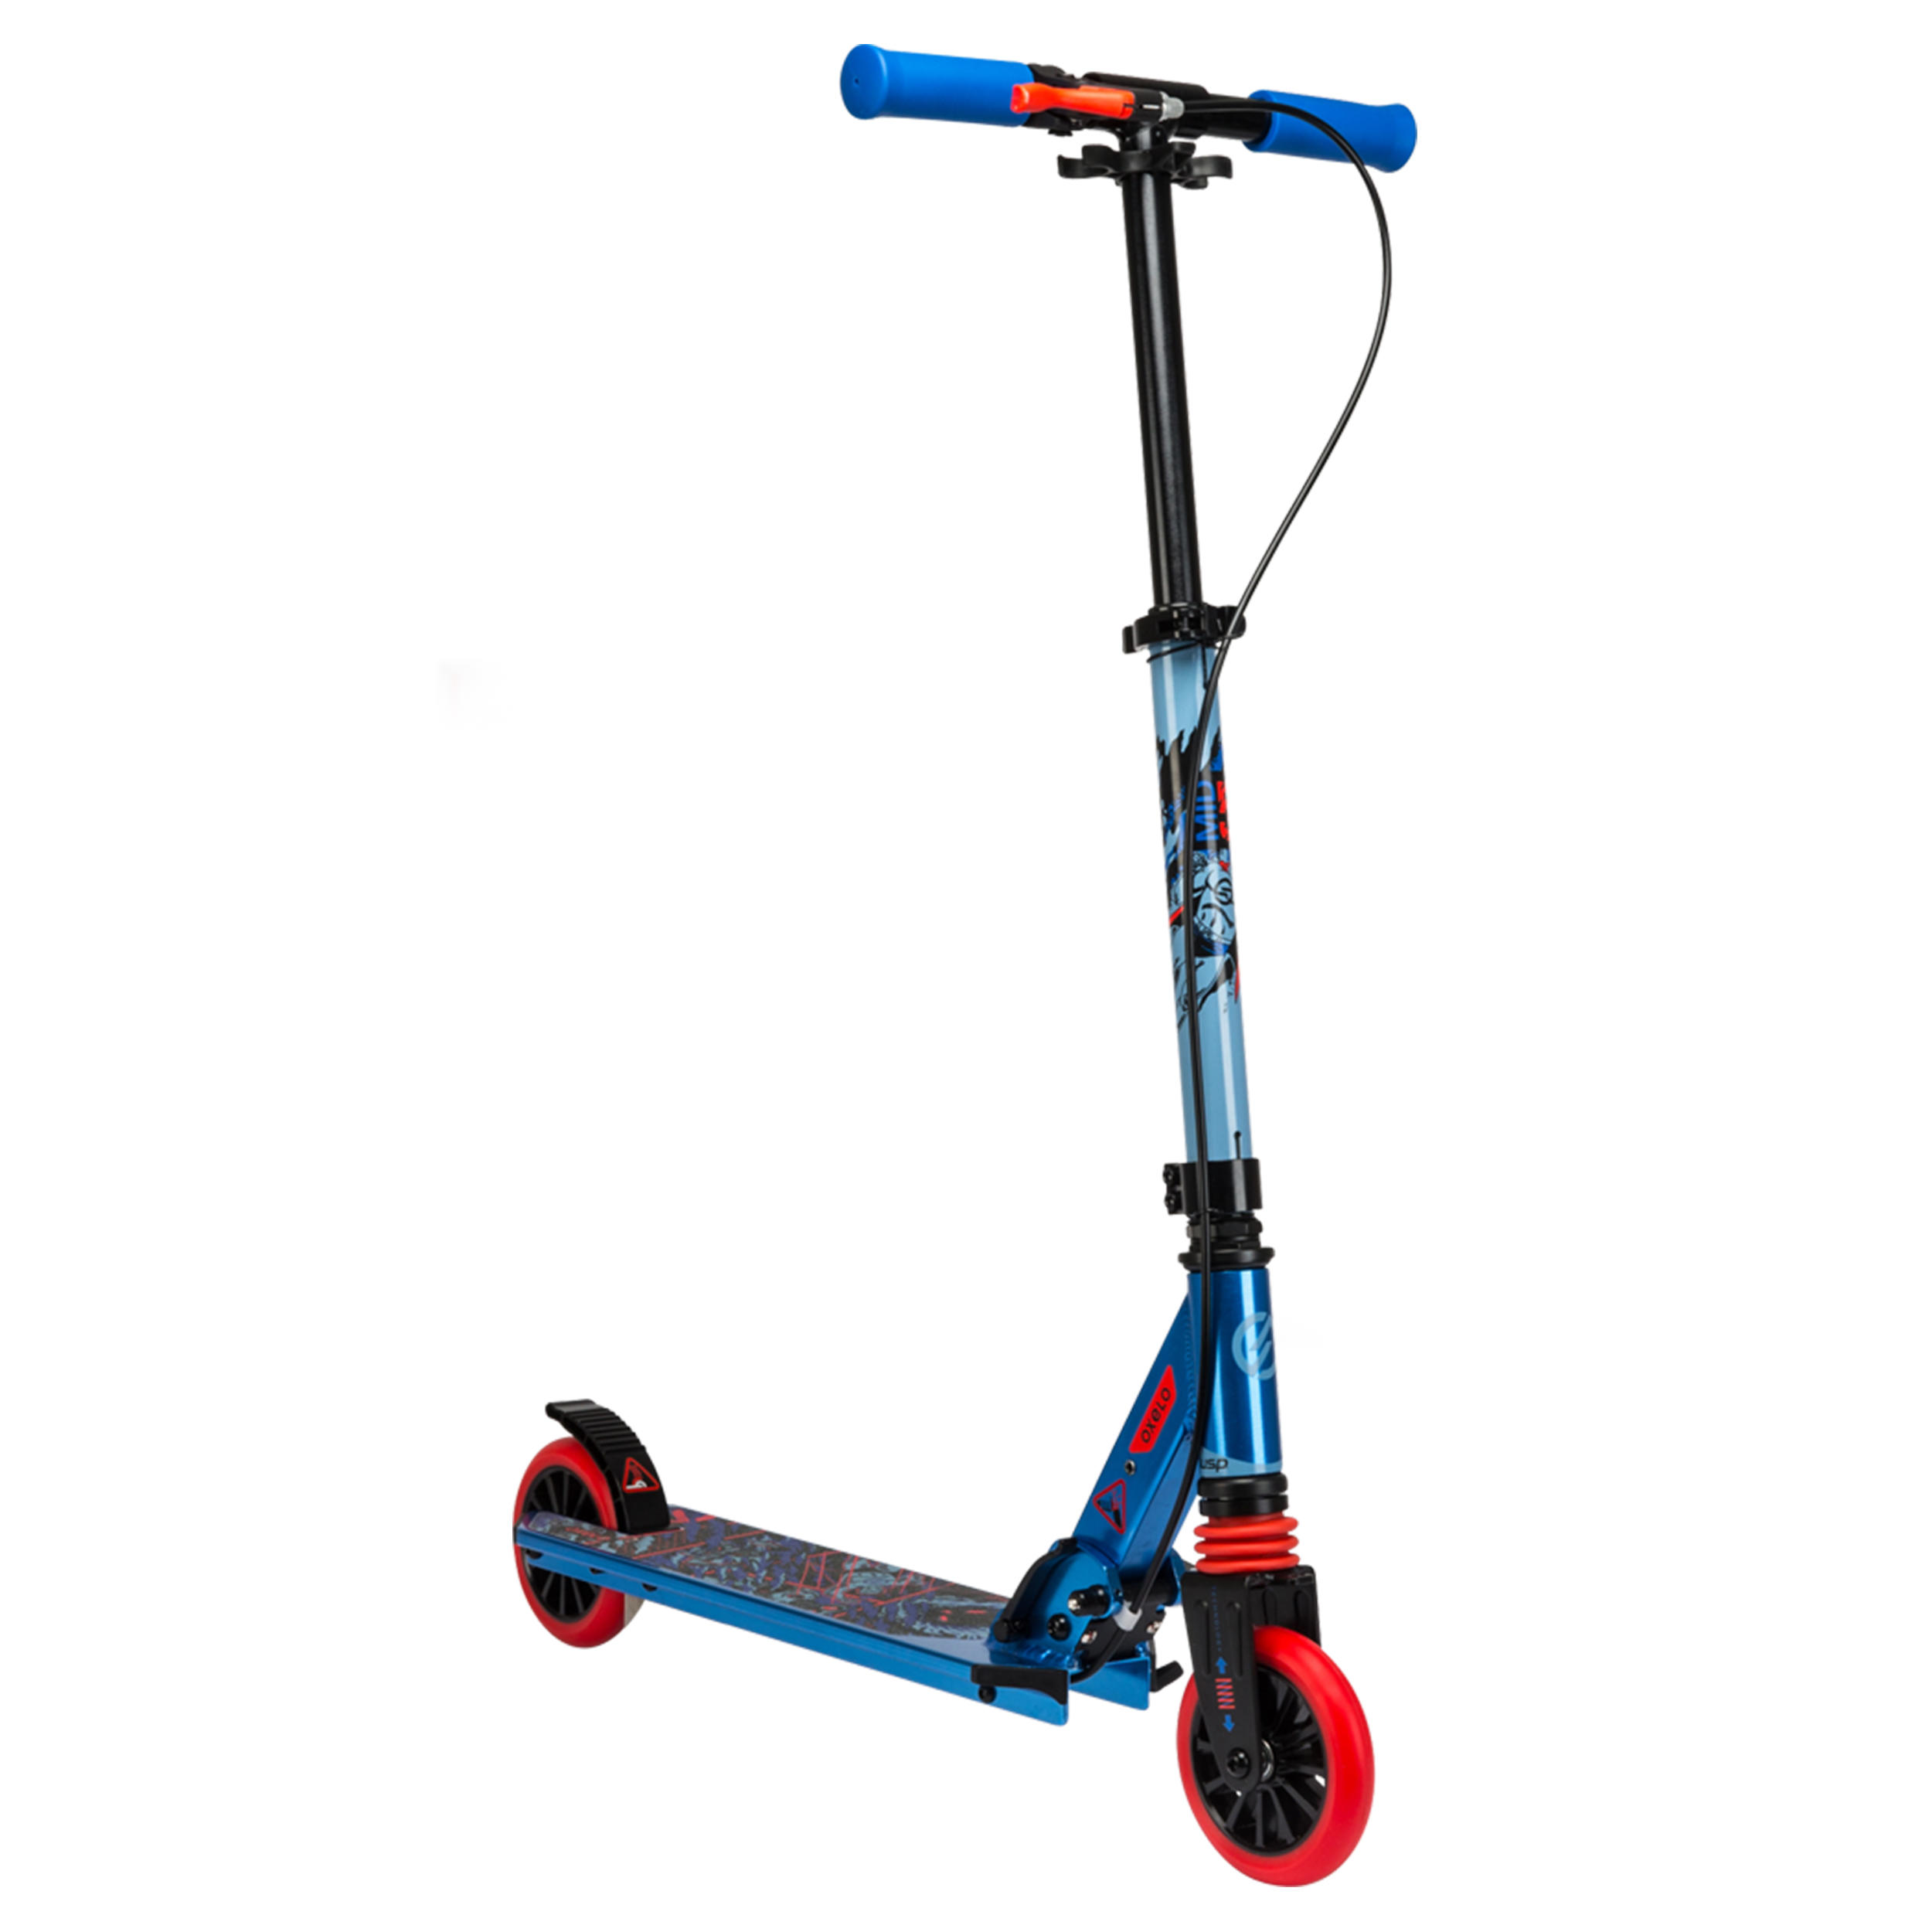 decathlon scooter wheels